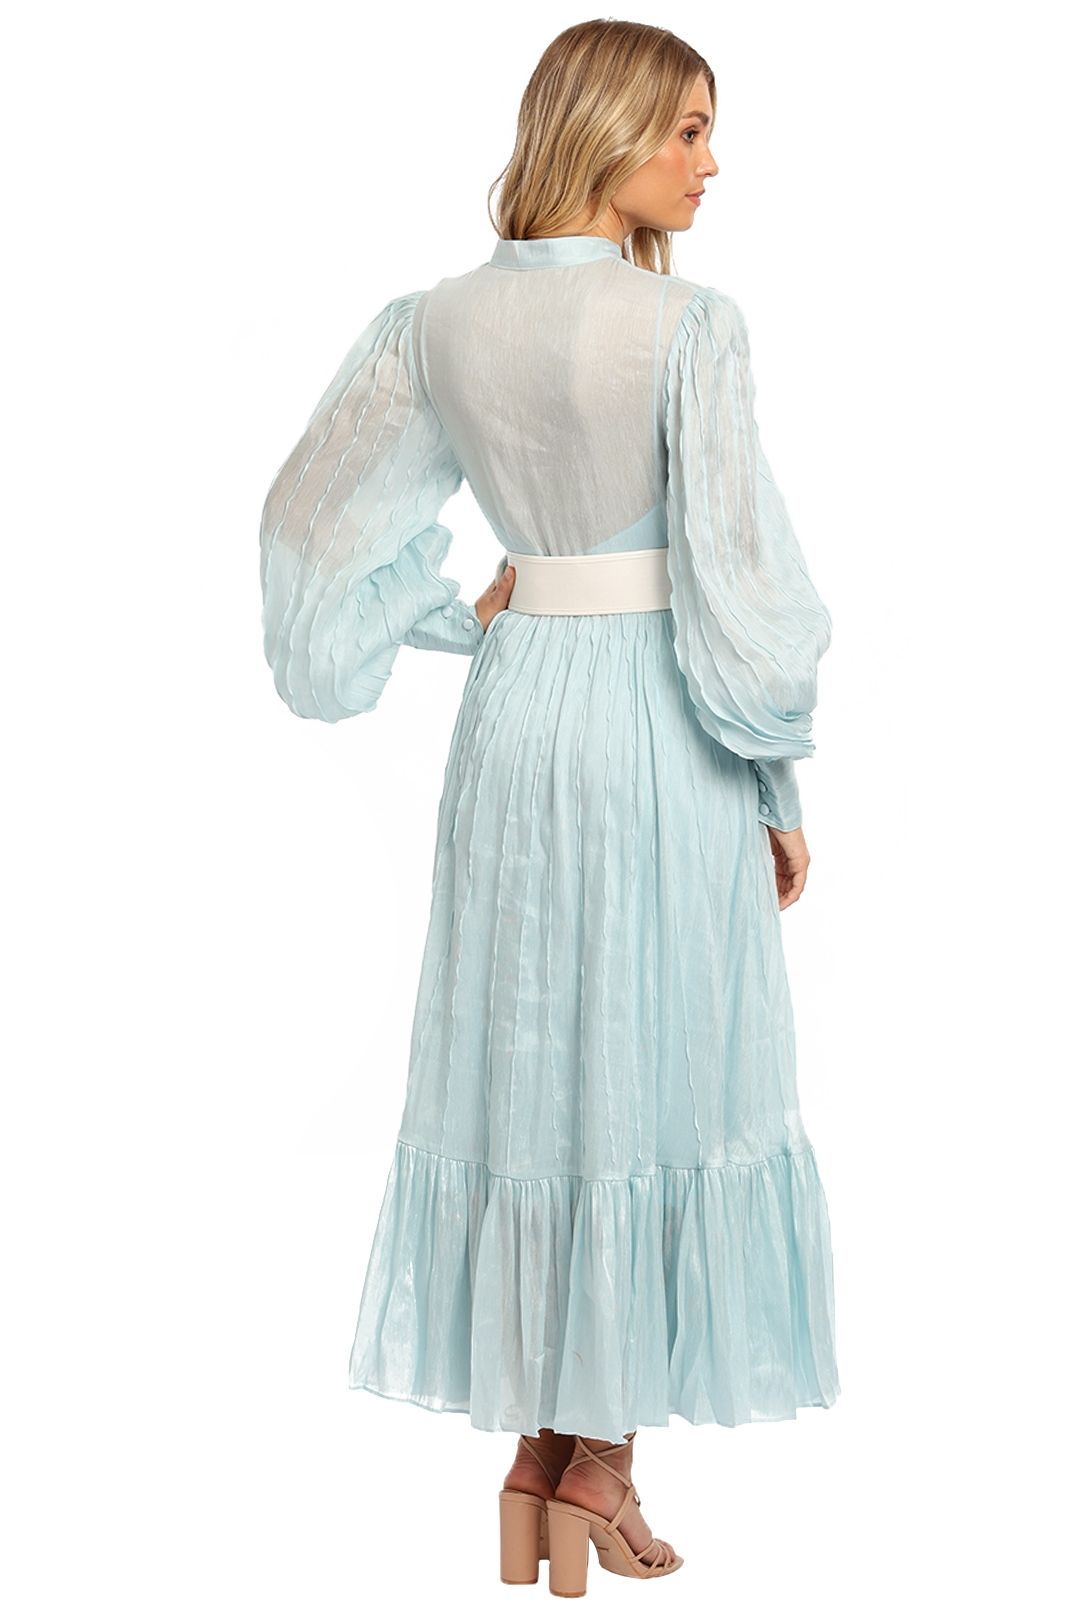 LEO LIN Cambridge Dress Pastel Blue